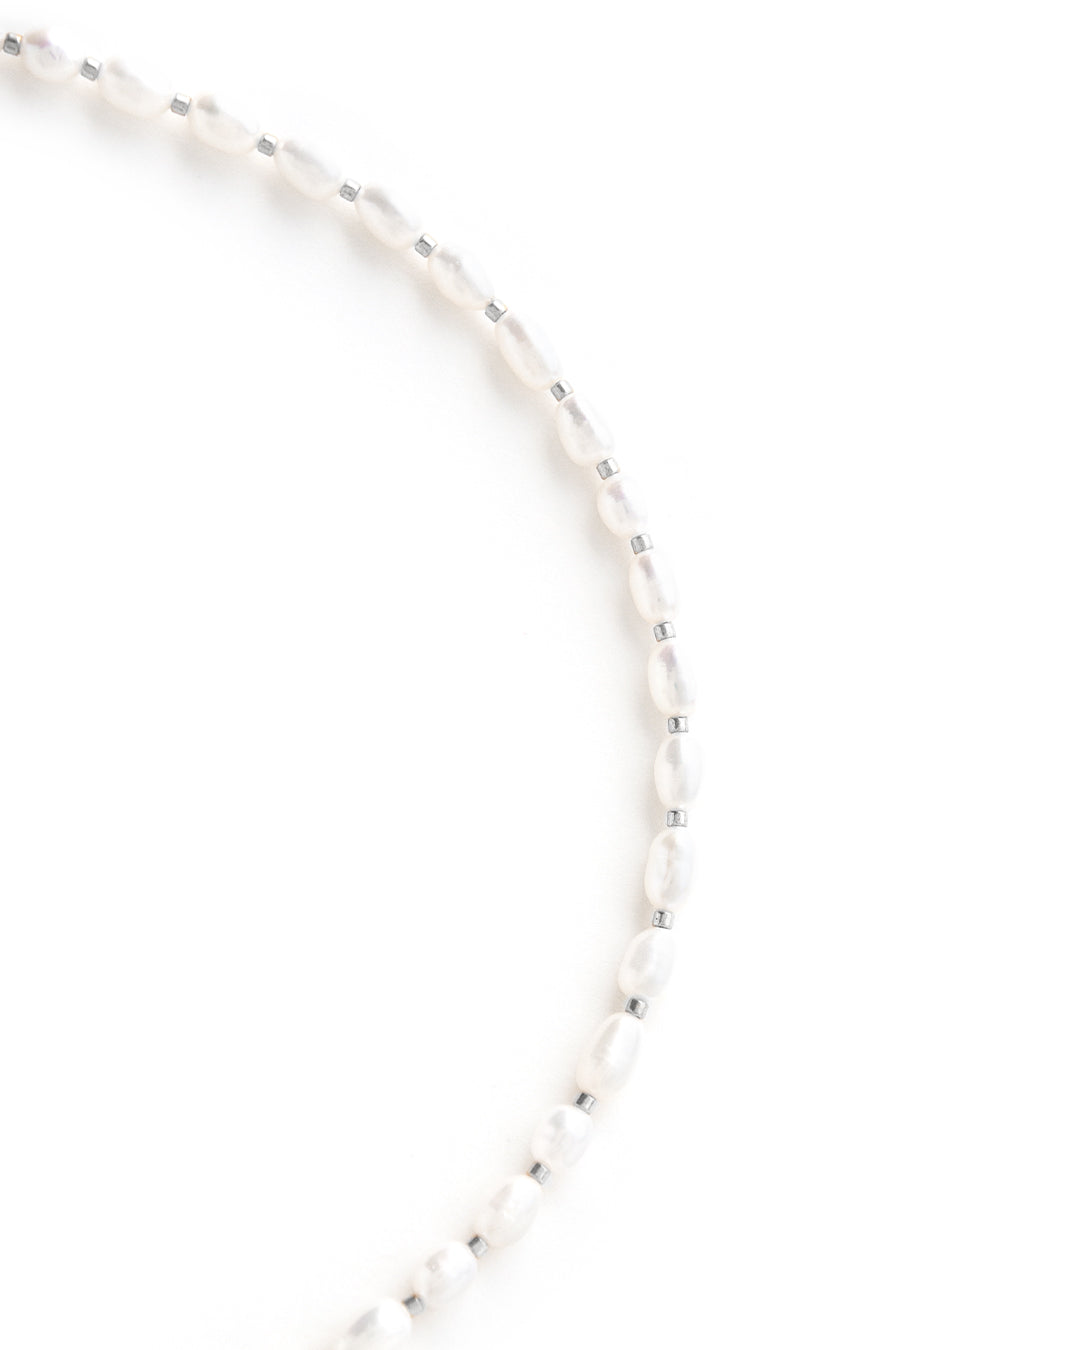 Filet Silver Necklace